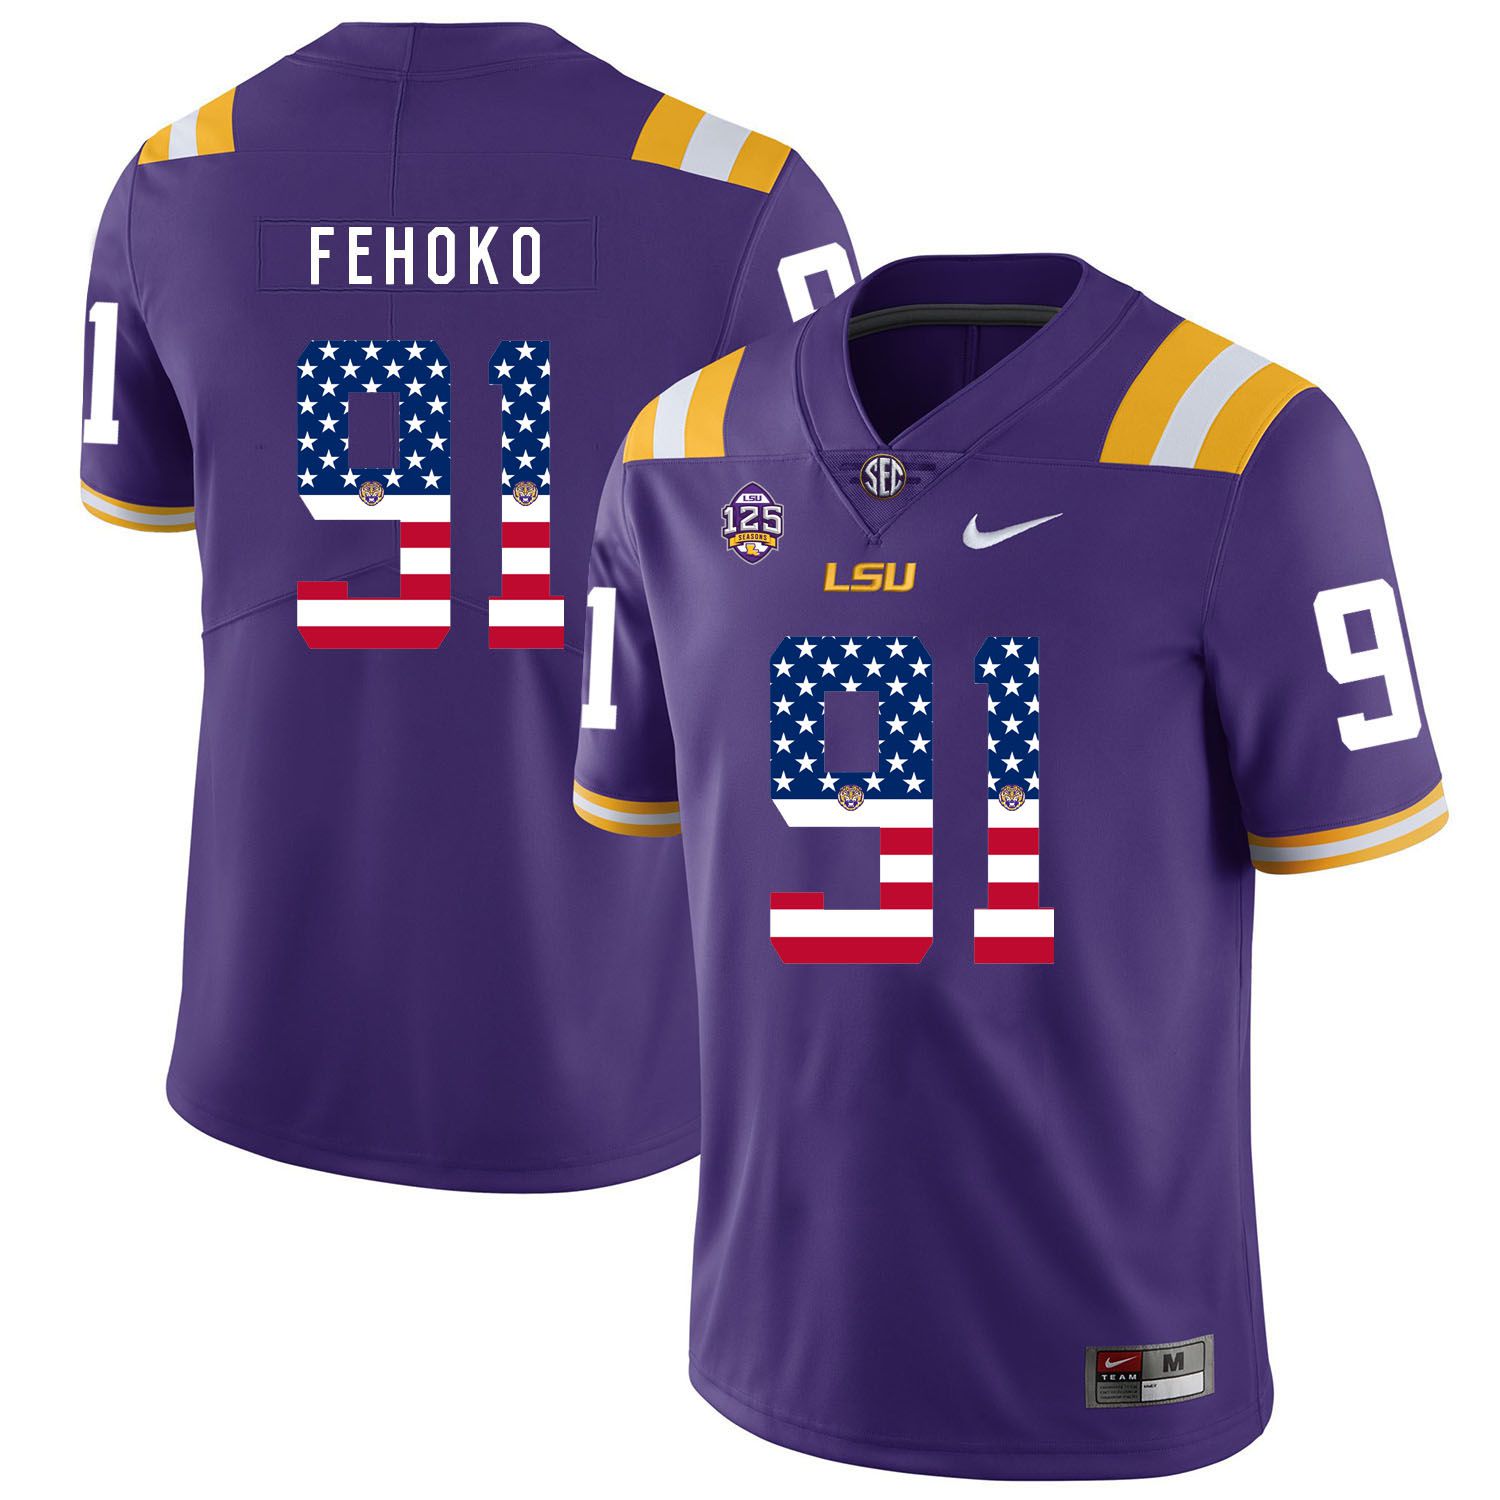 Men LSU Tigers 91 Fehoko Purple Flag Customized NCAA Jerseys